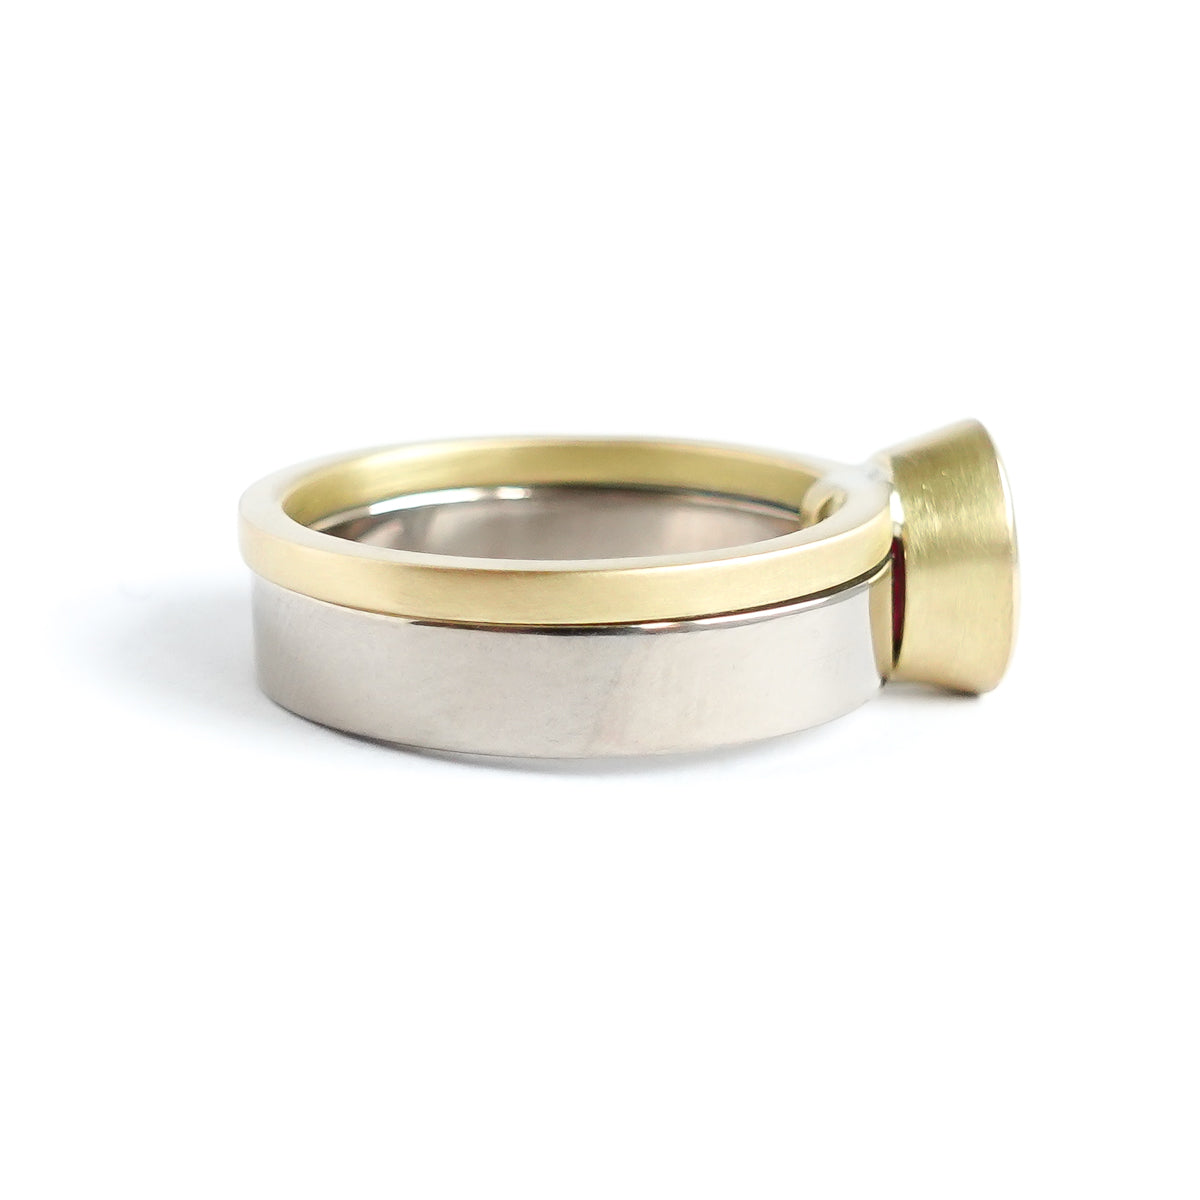 Ruby wedding anniversary ring gold contemporary handmade bespoke Sue Lane